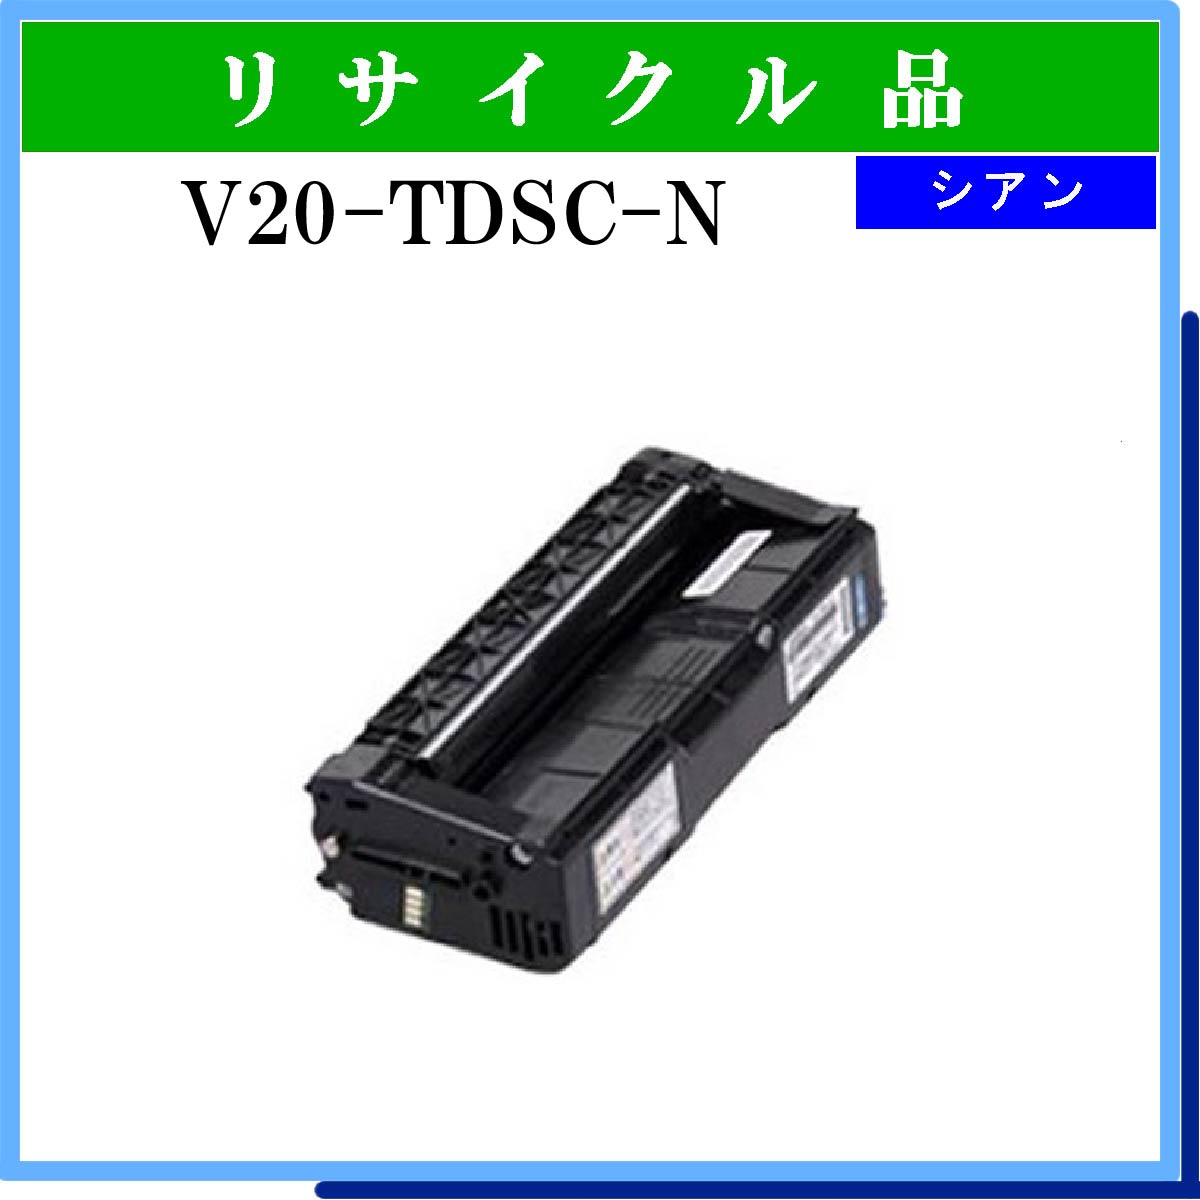 V20-TDSC-N